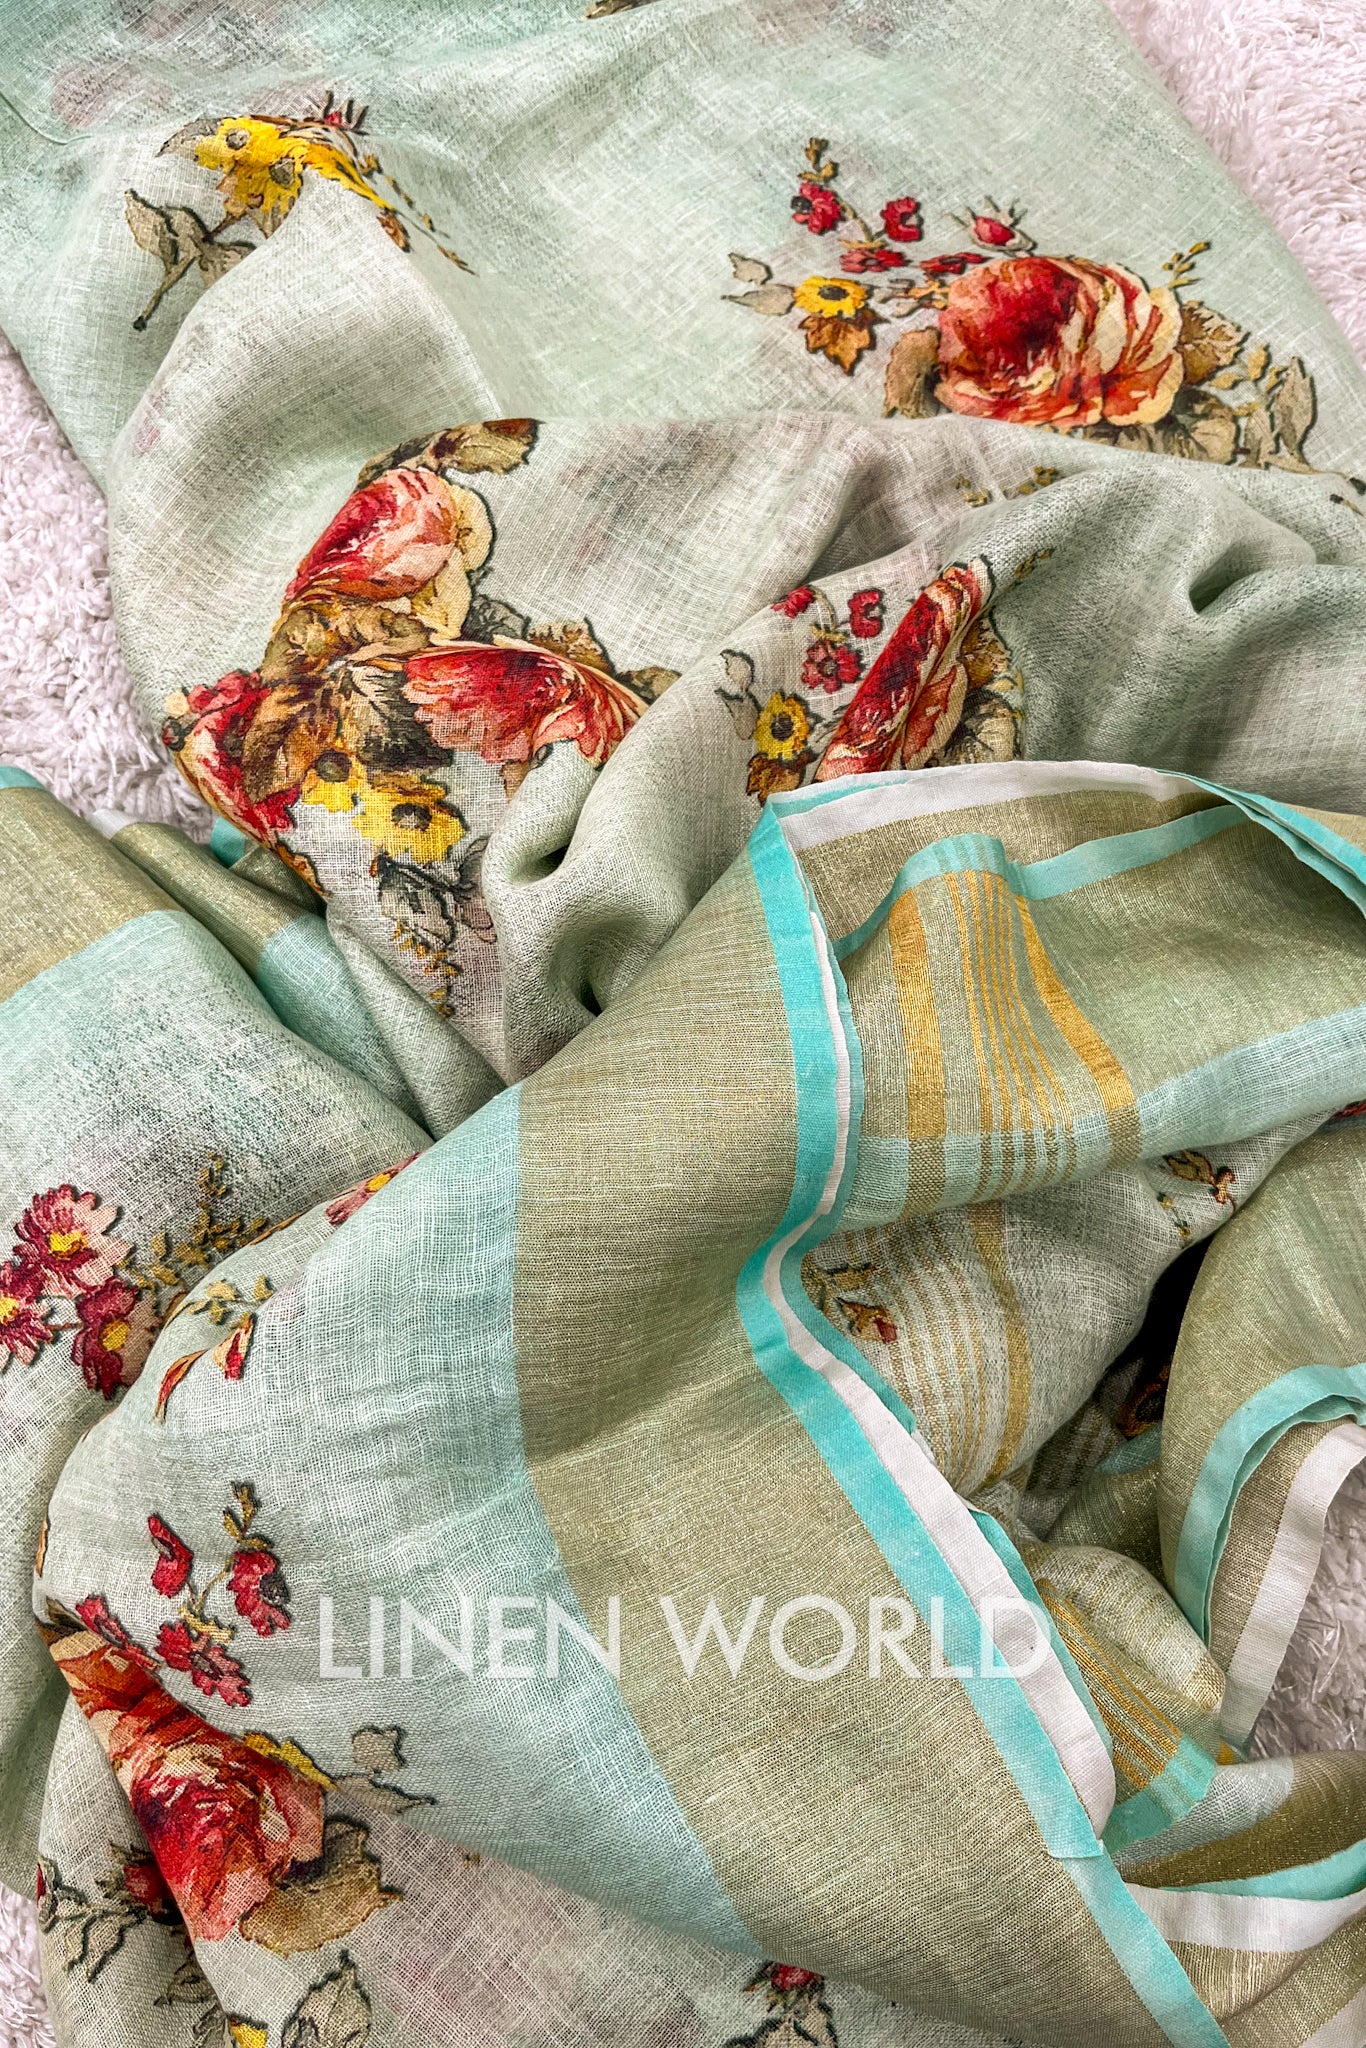 zaina - digital printed pure linen saree | linenworldonline.in